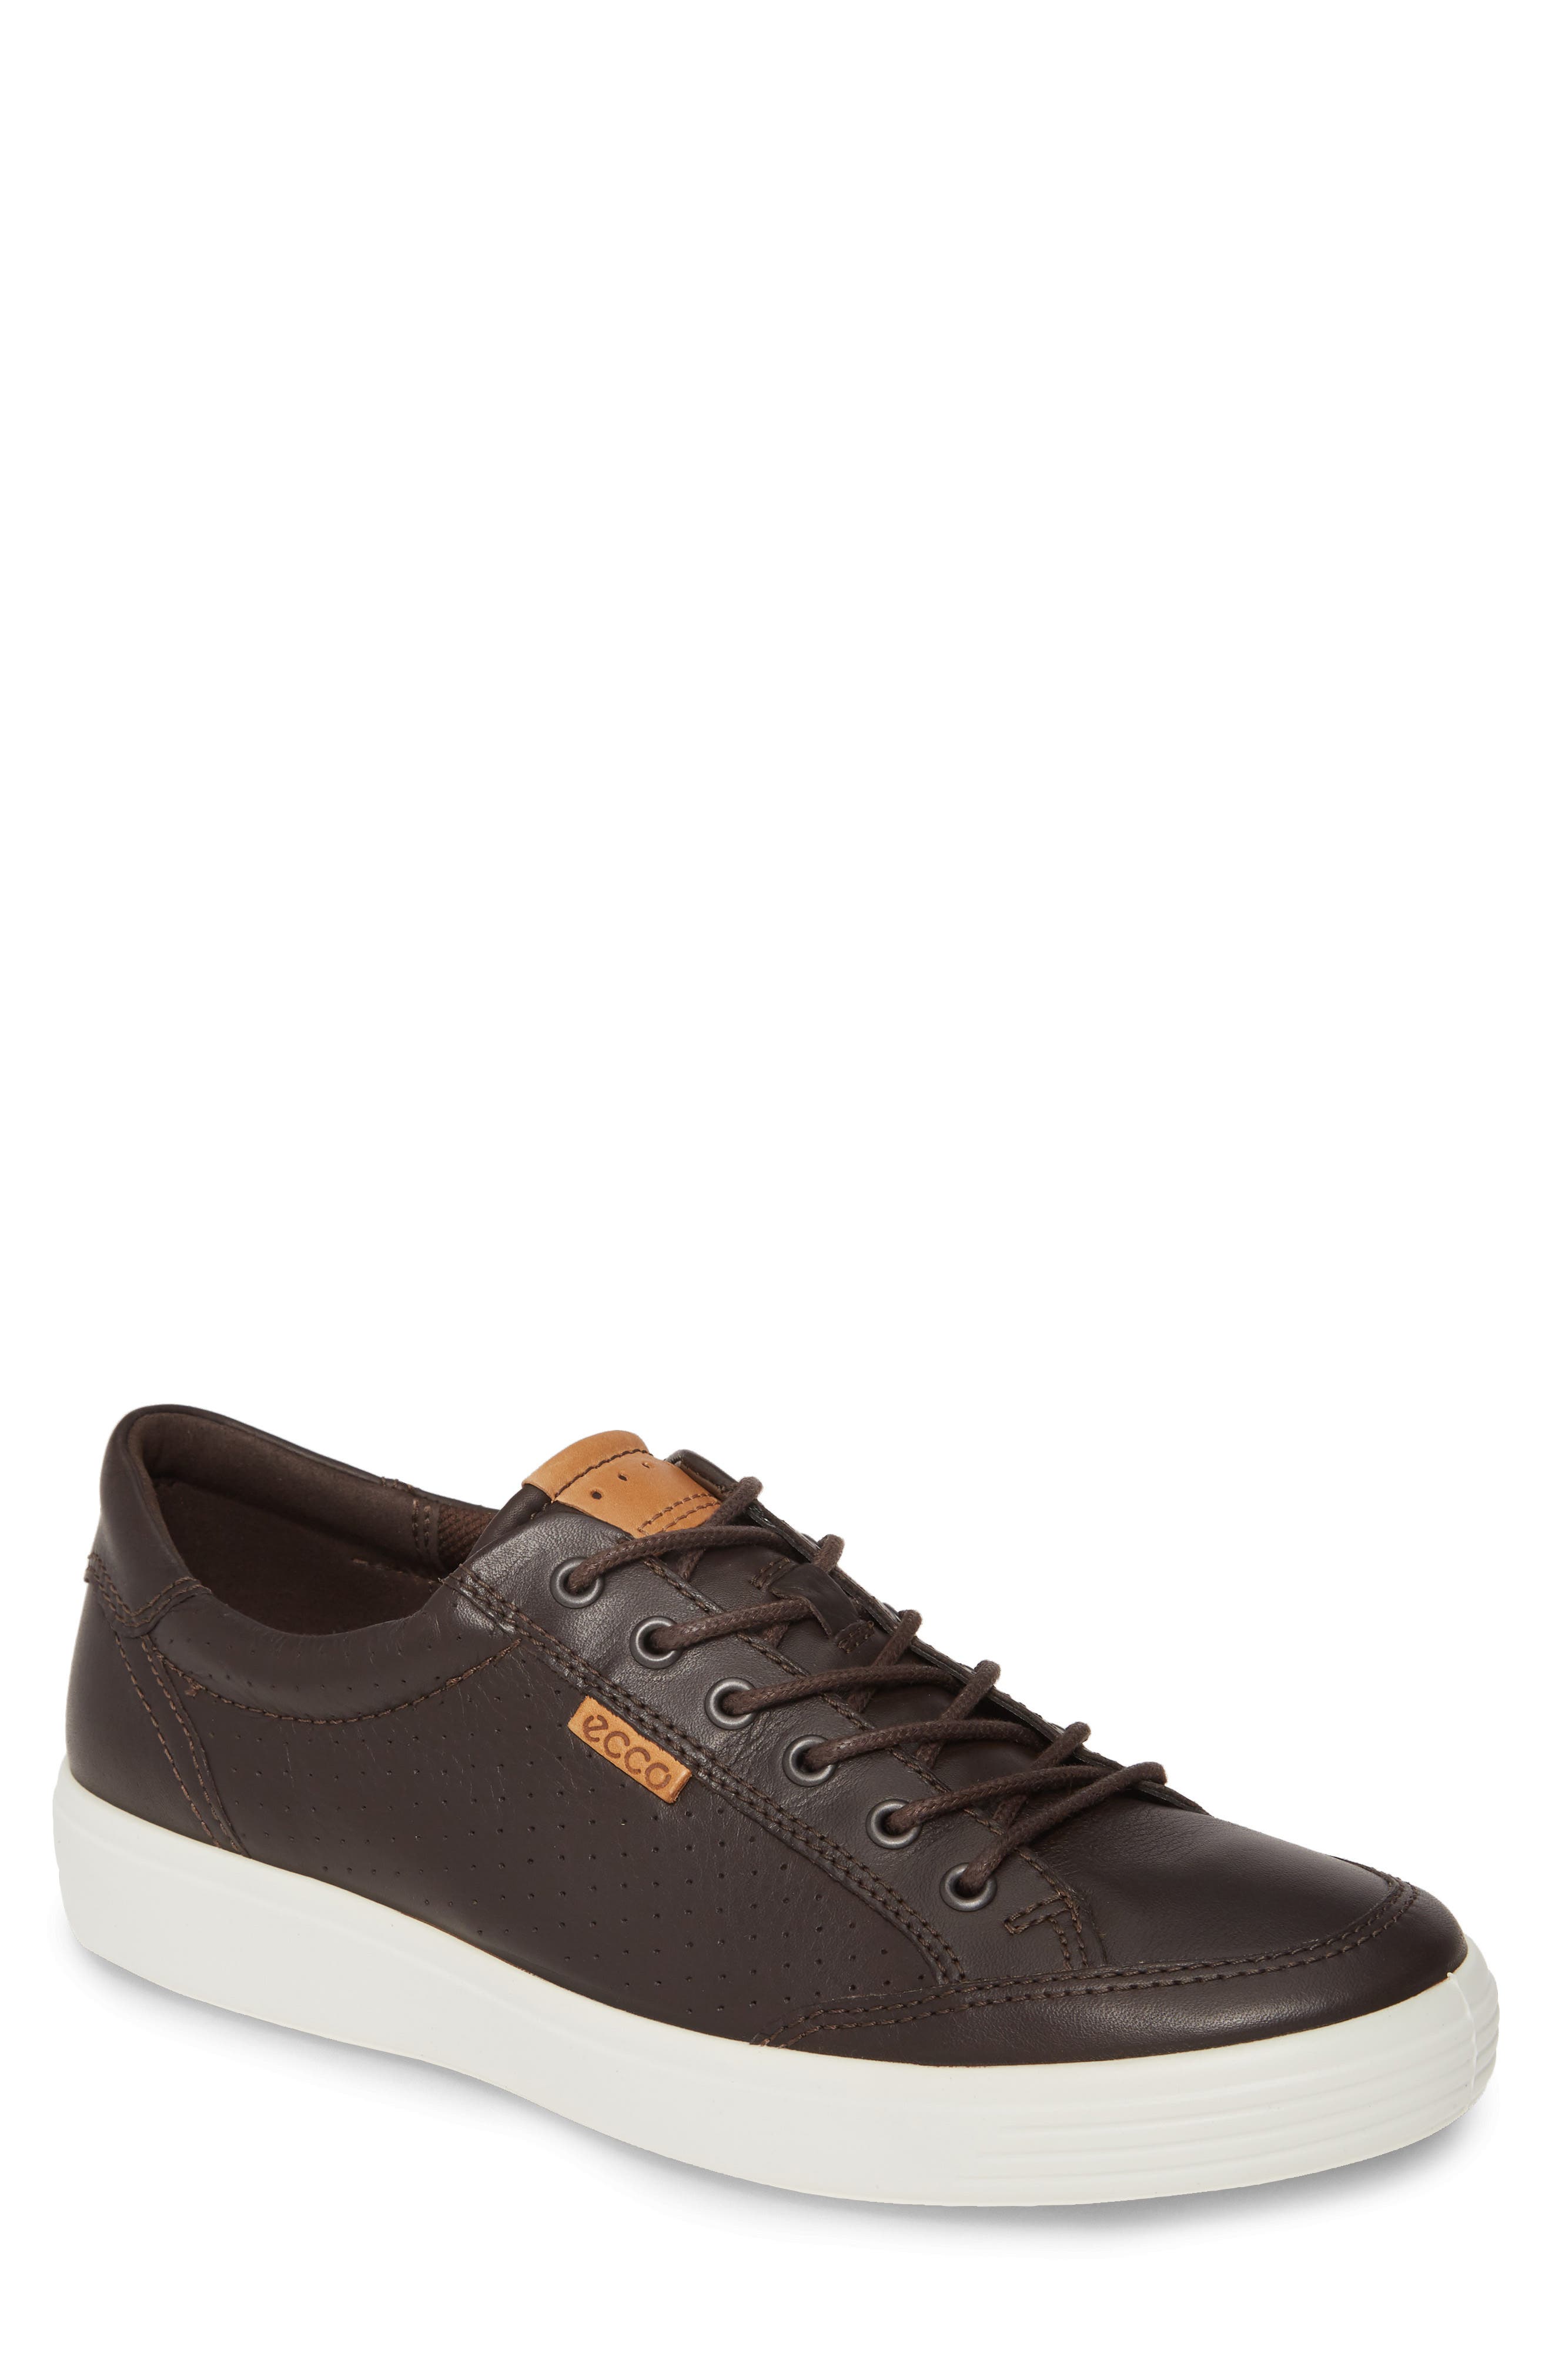 UPC 825840085105 product image for Men's Ecco Soft 7 Light Sneaker, Size 11-11.5US / 45EU - Brown | upcitemdb.com